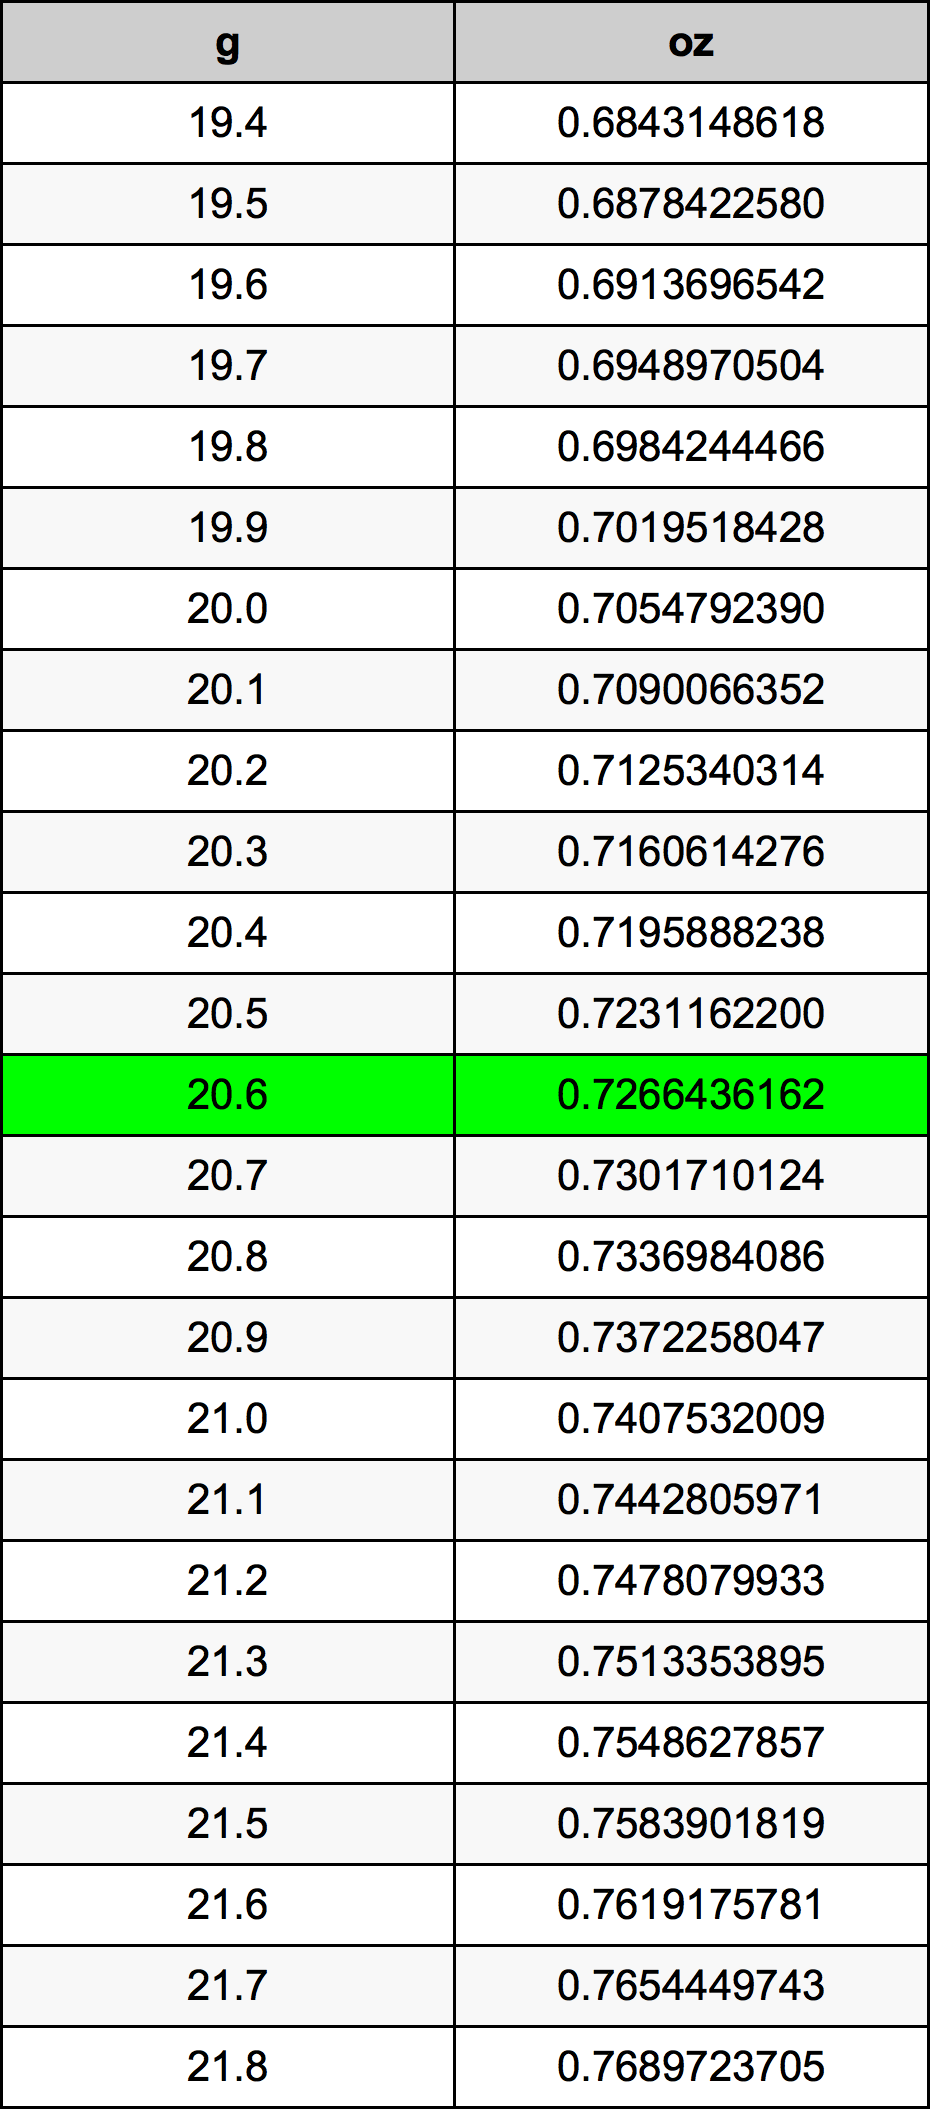 20.6 غرام جدول تحويل